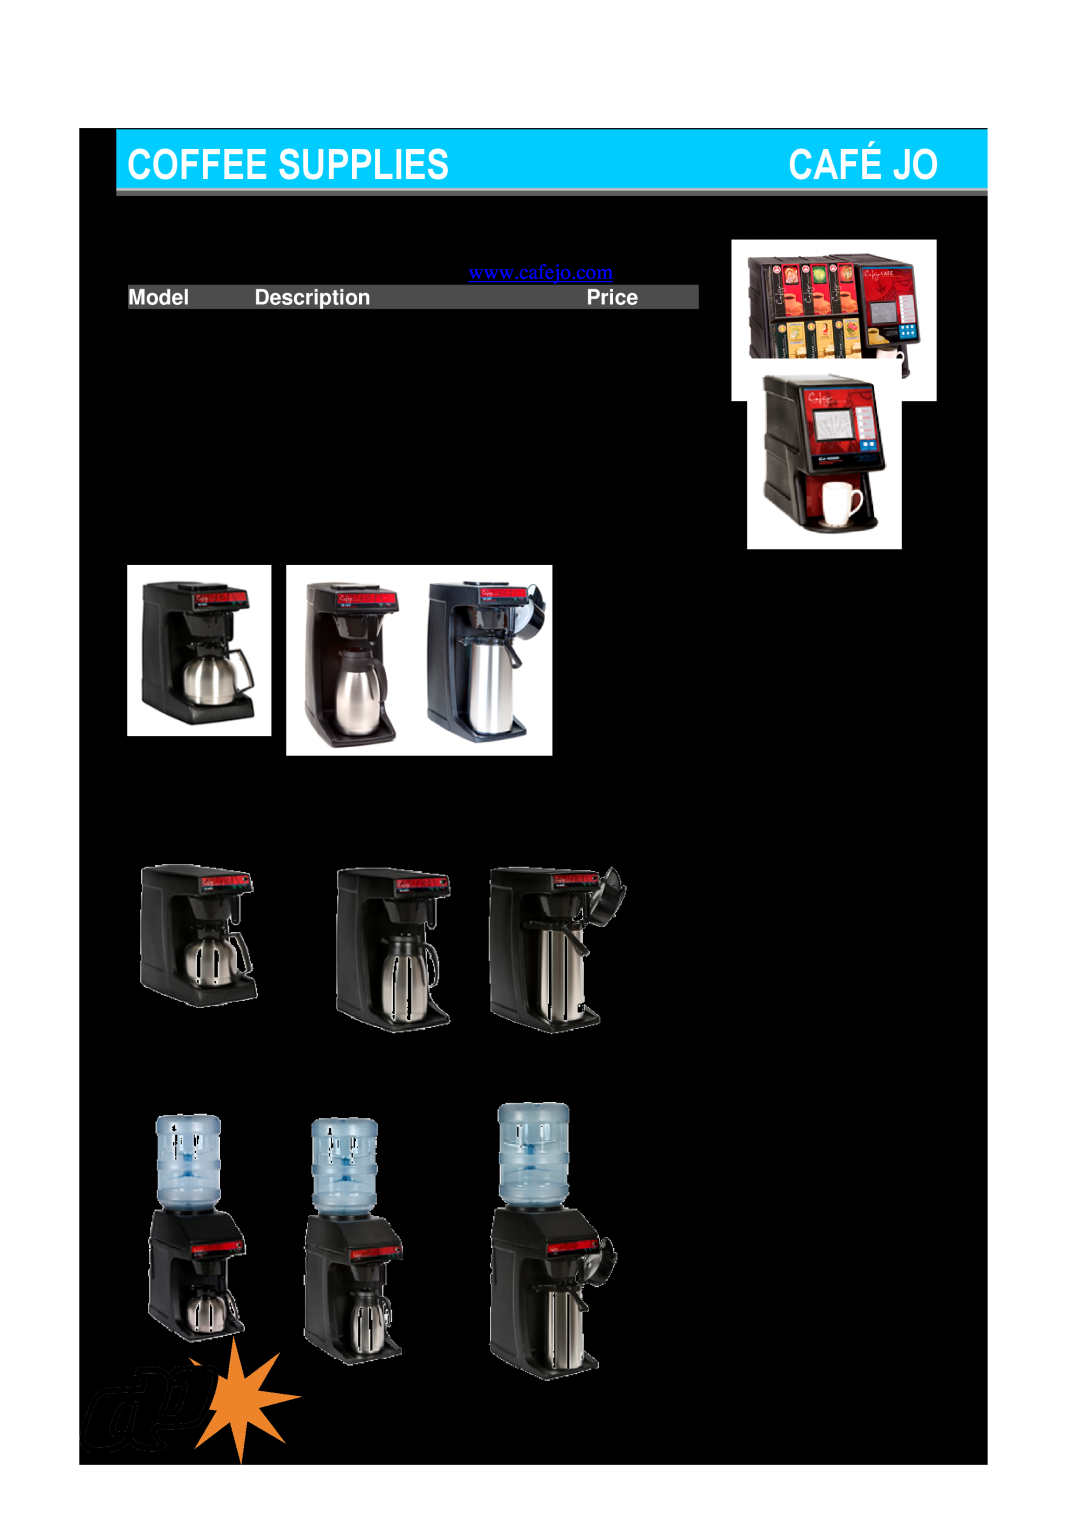 Hamilton Beach TE419 manual Coffee Supplies, Café Jo, Model, Description, Price, Single Cup Brewers, Pour Over Brewer 